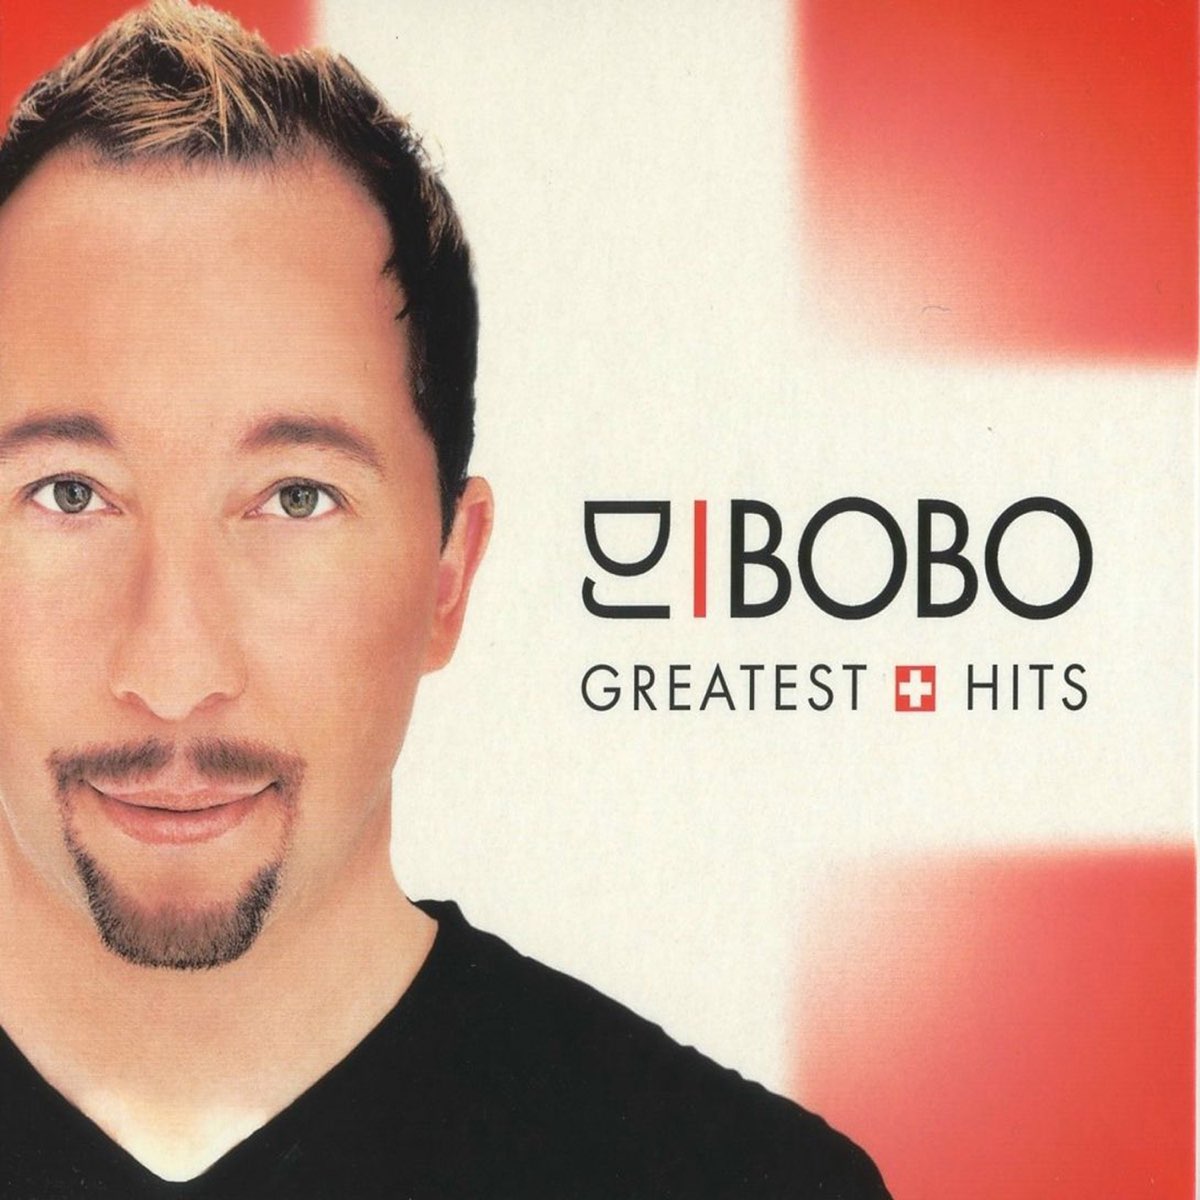 DJ Bobo обложка. DJ Bobo "Greatest Hits". DJ Bobo Постер. Дж бобо фото. Бобо песенки